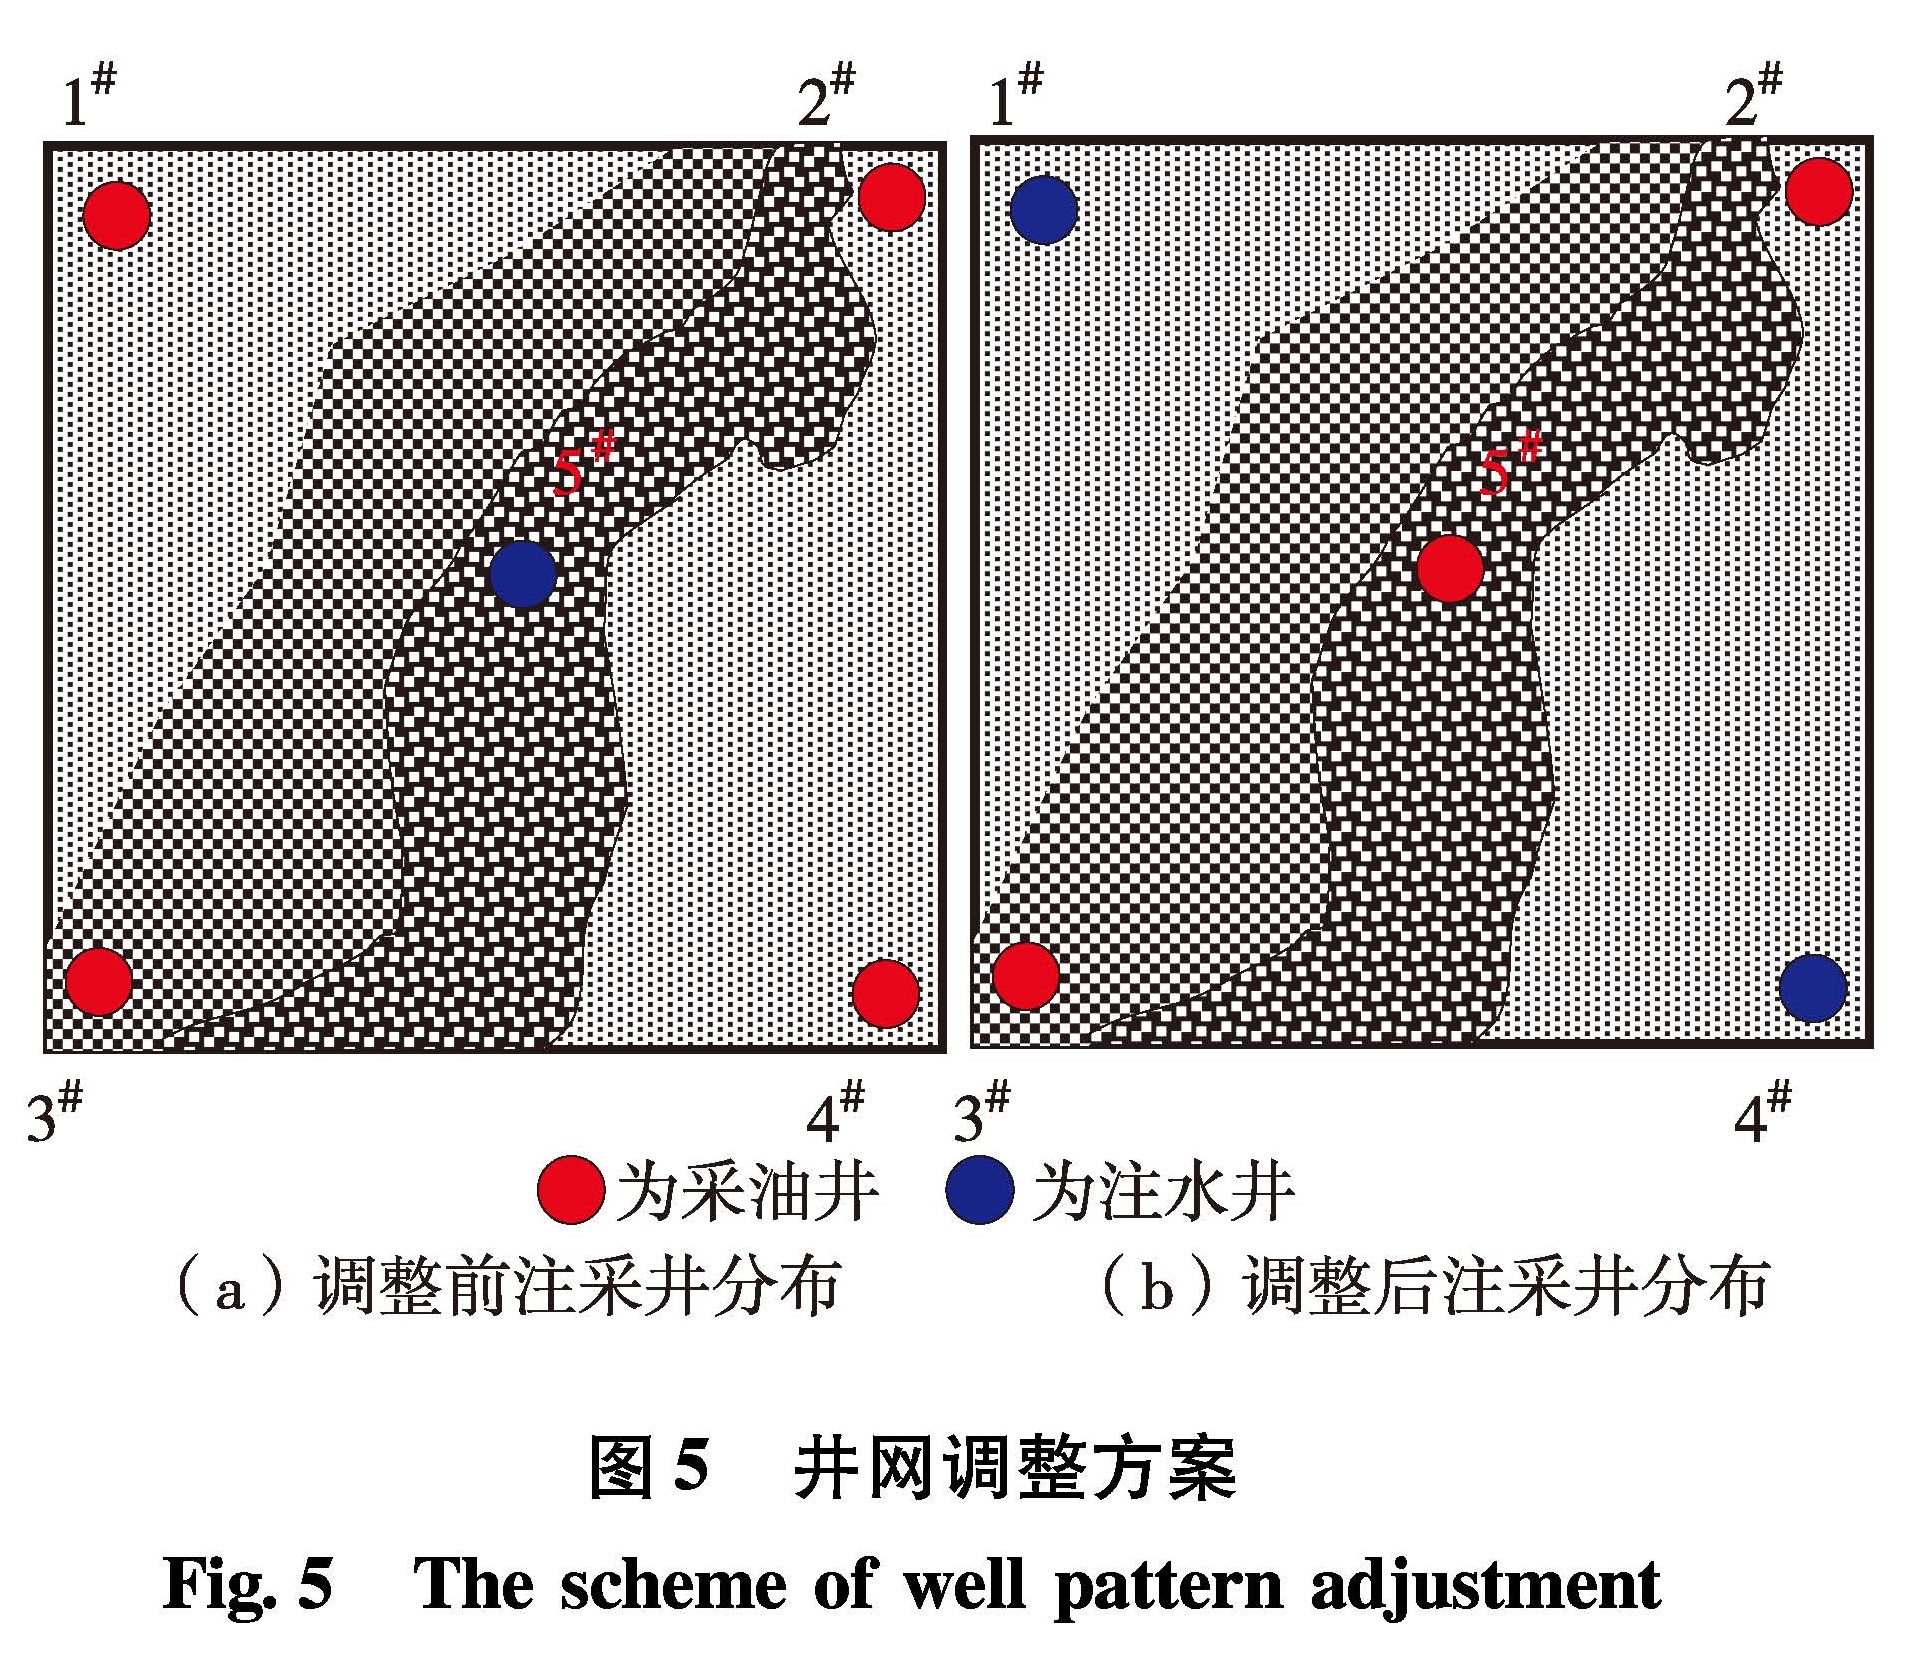 图5 井网调整方案<br/>Fig.5 The scheme of well pattern adjustment